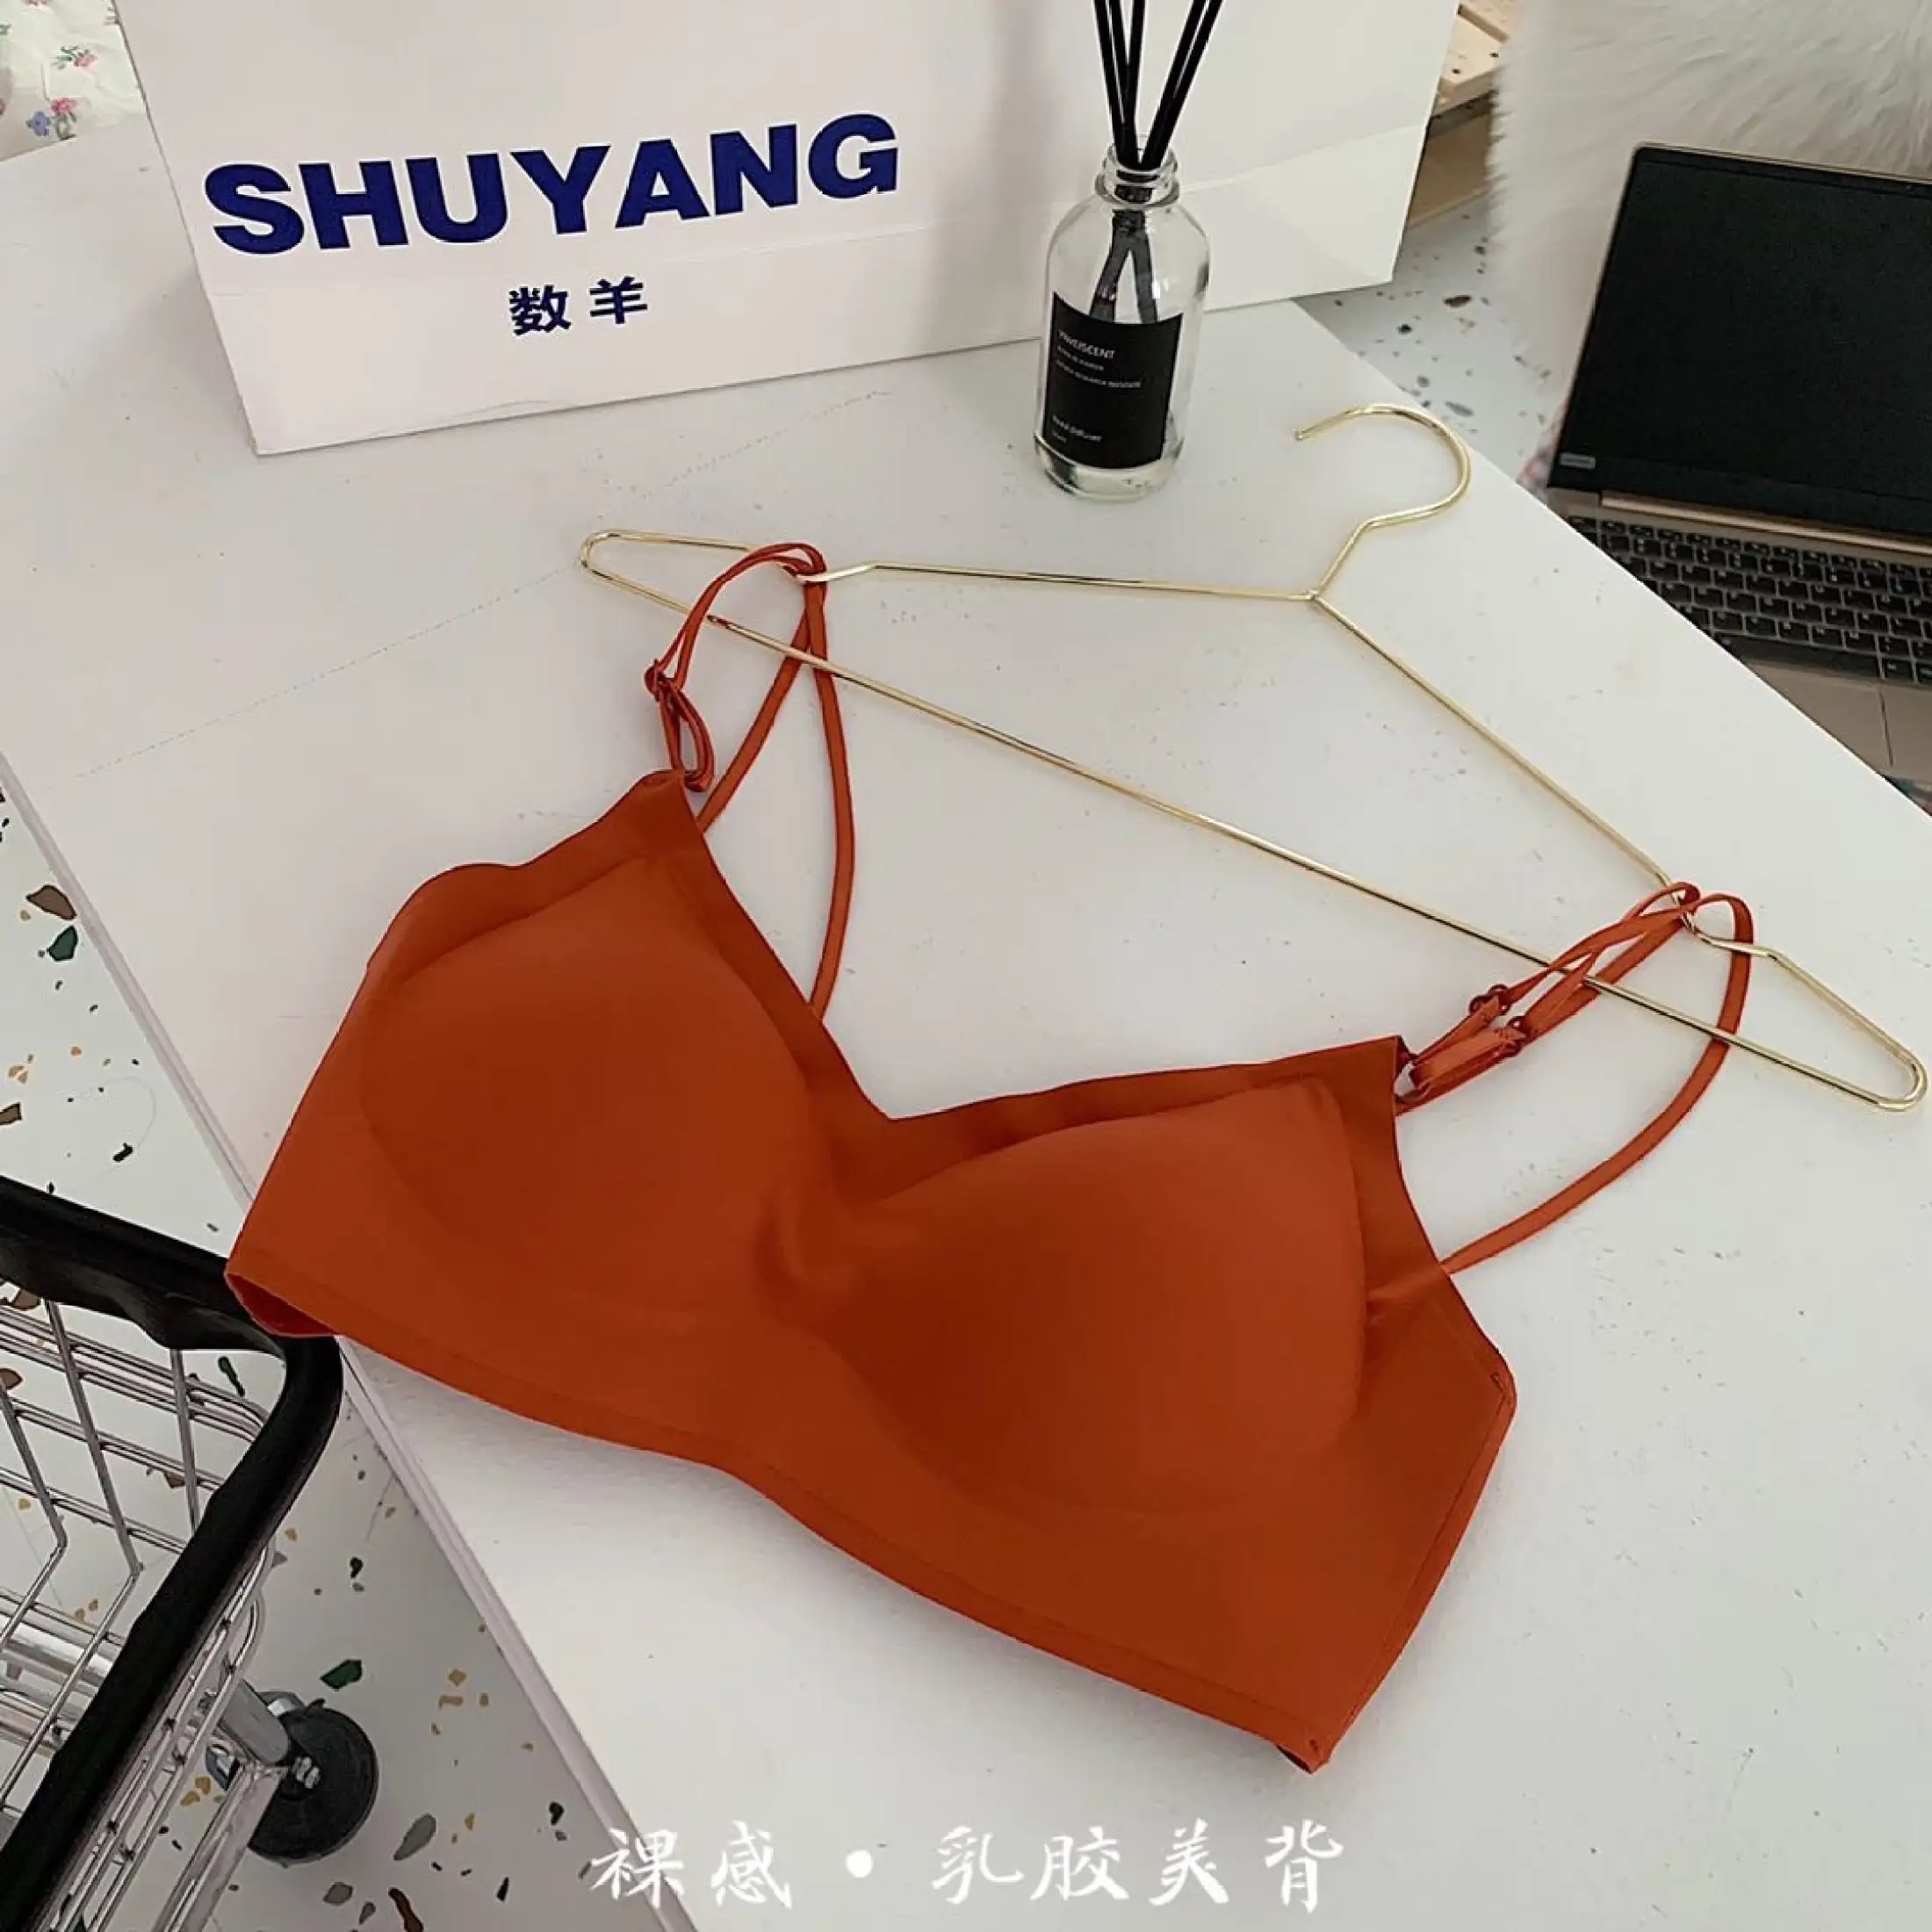 No nude model pics in Shuyang